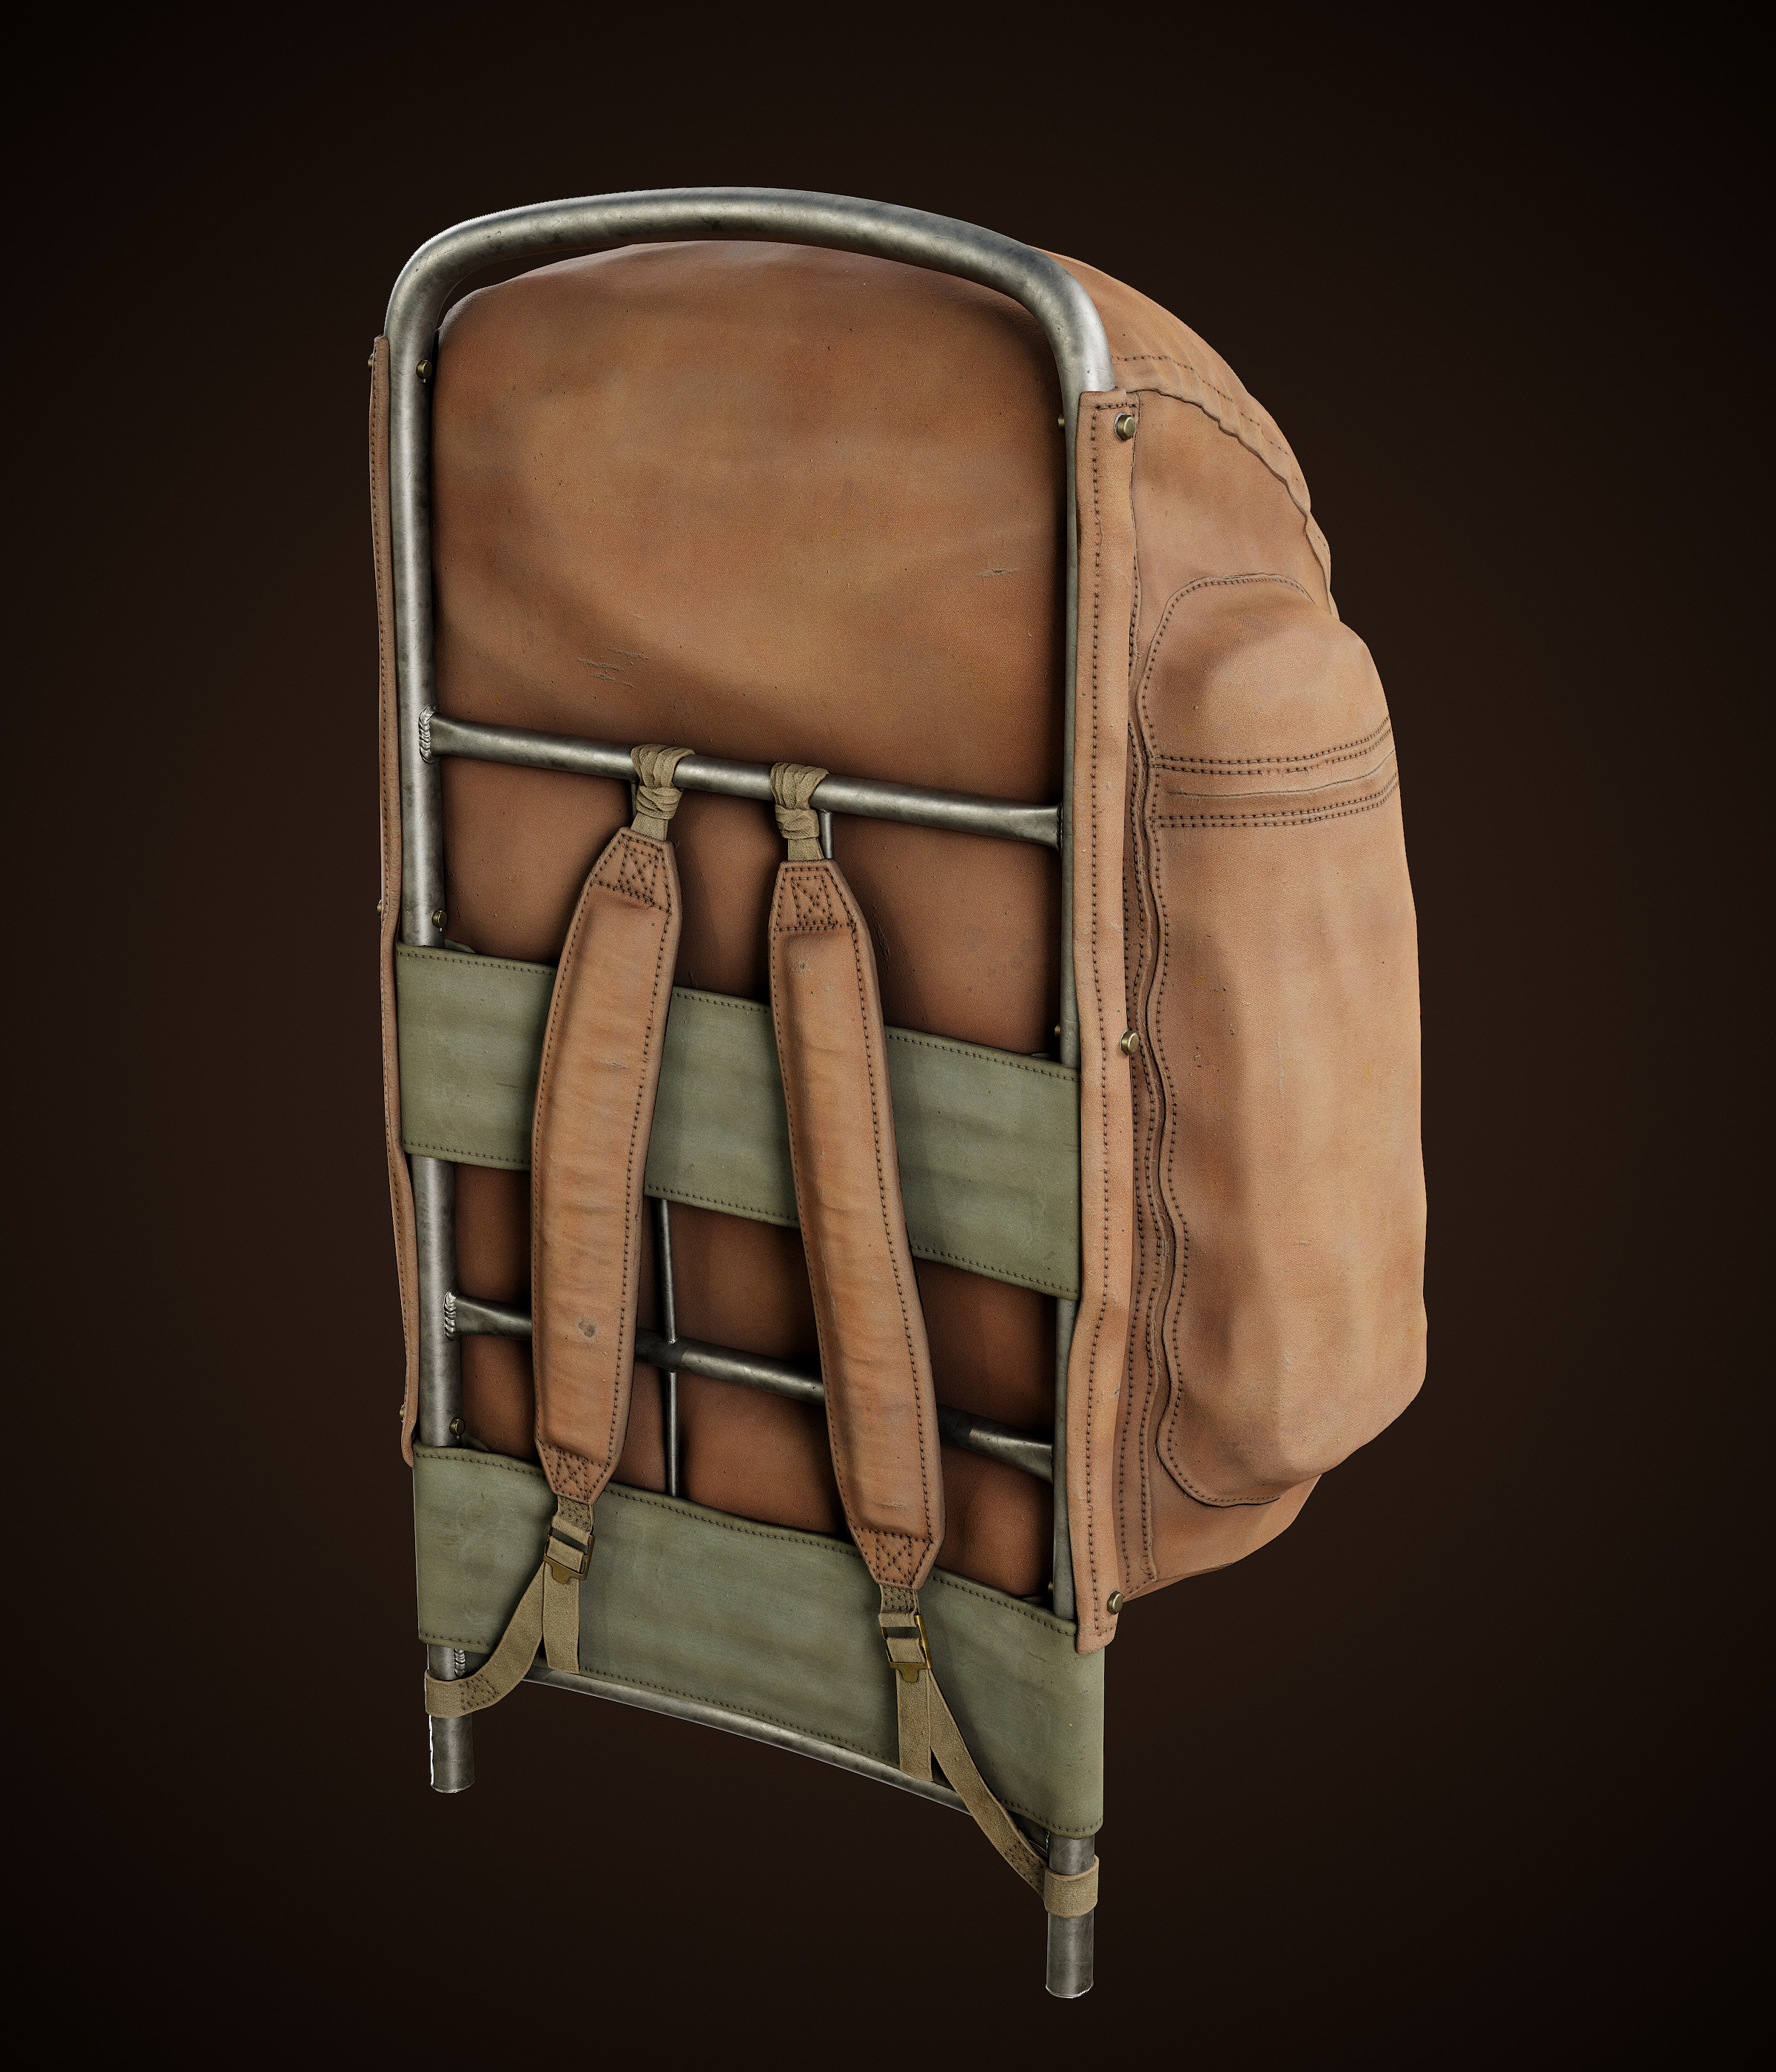 Prismatic Overlay Backpack – The Art of Hakan Hisim